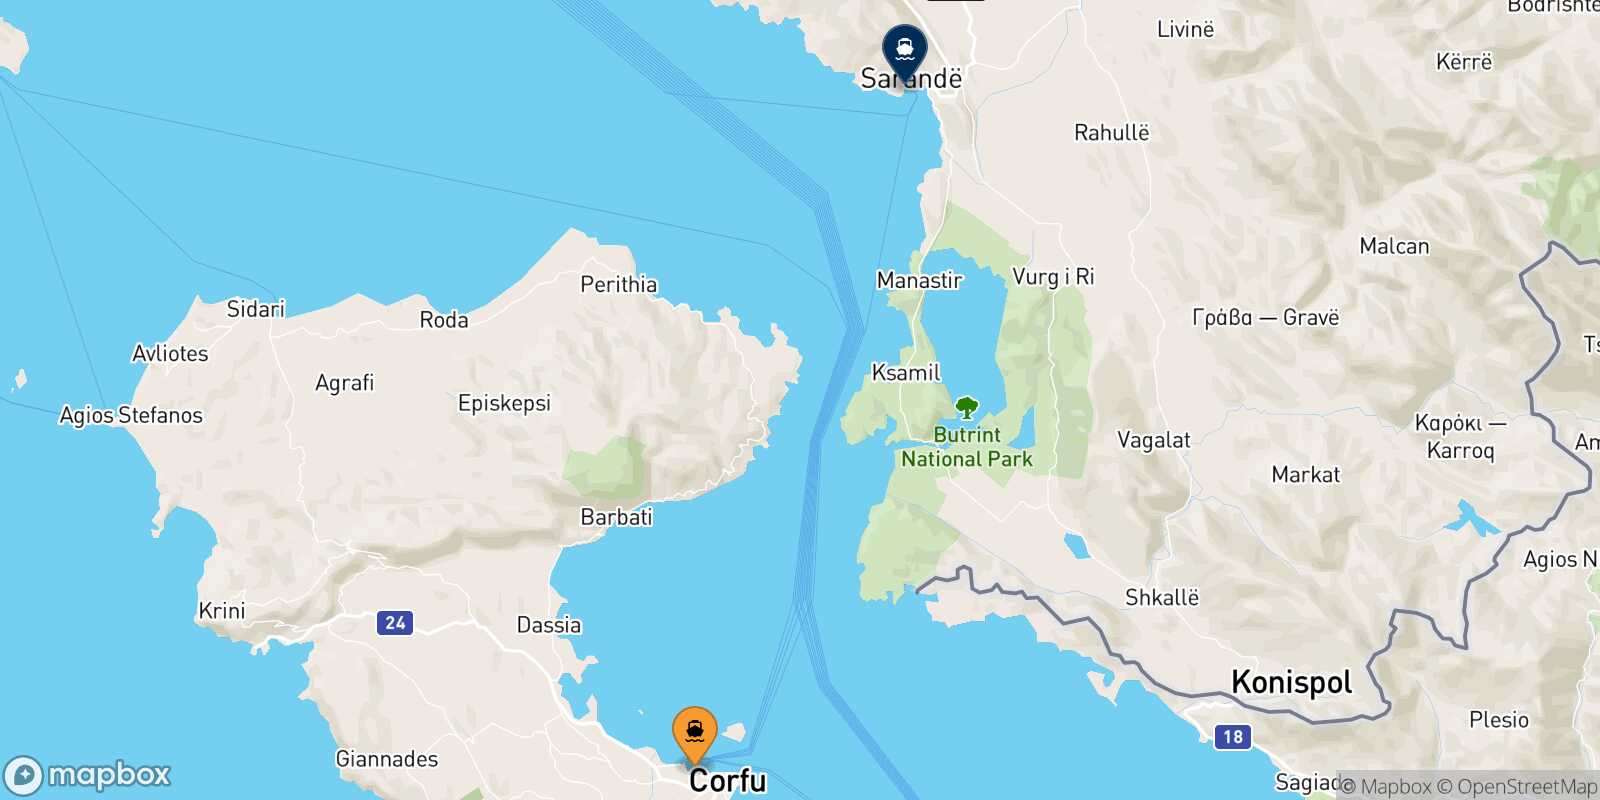 Corfu Saranda route map